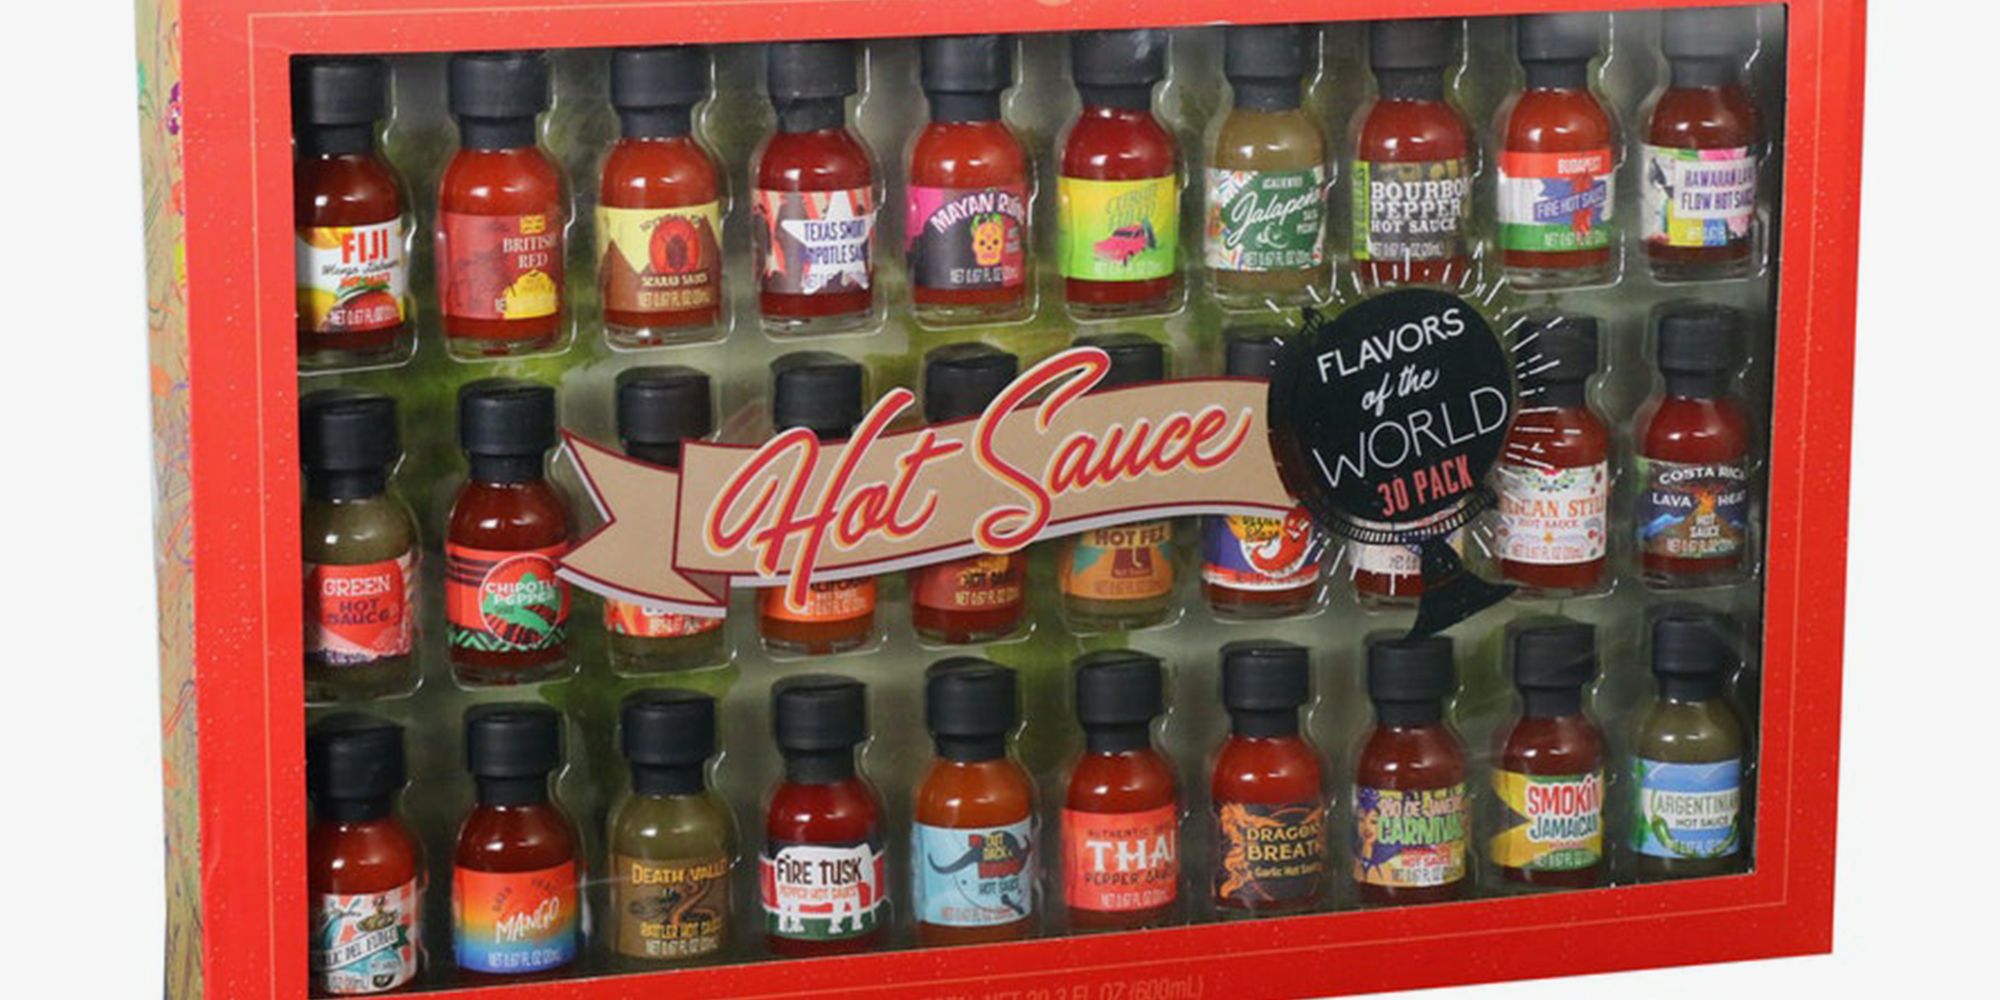 Hot sauce gift sets